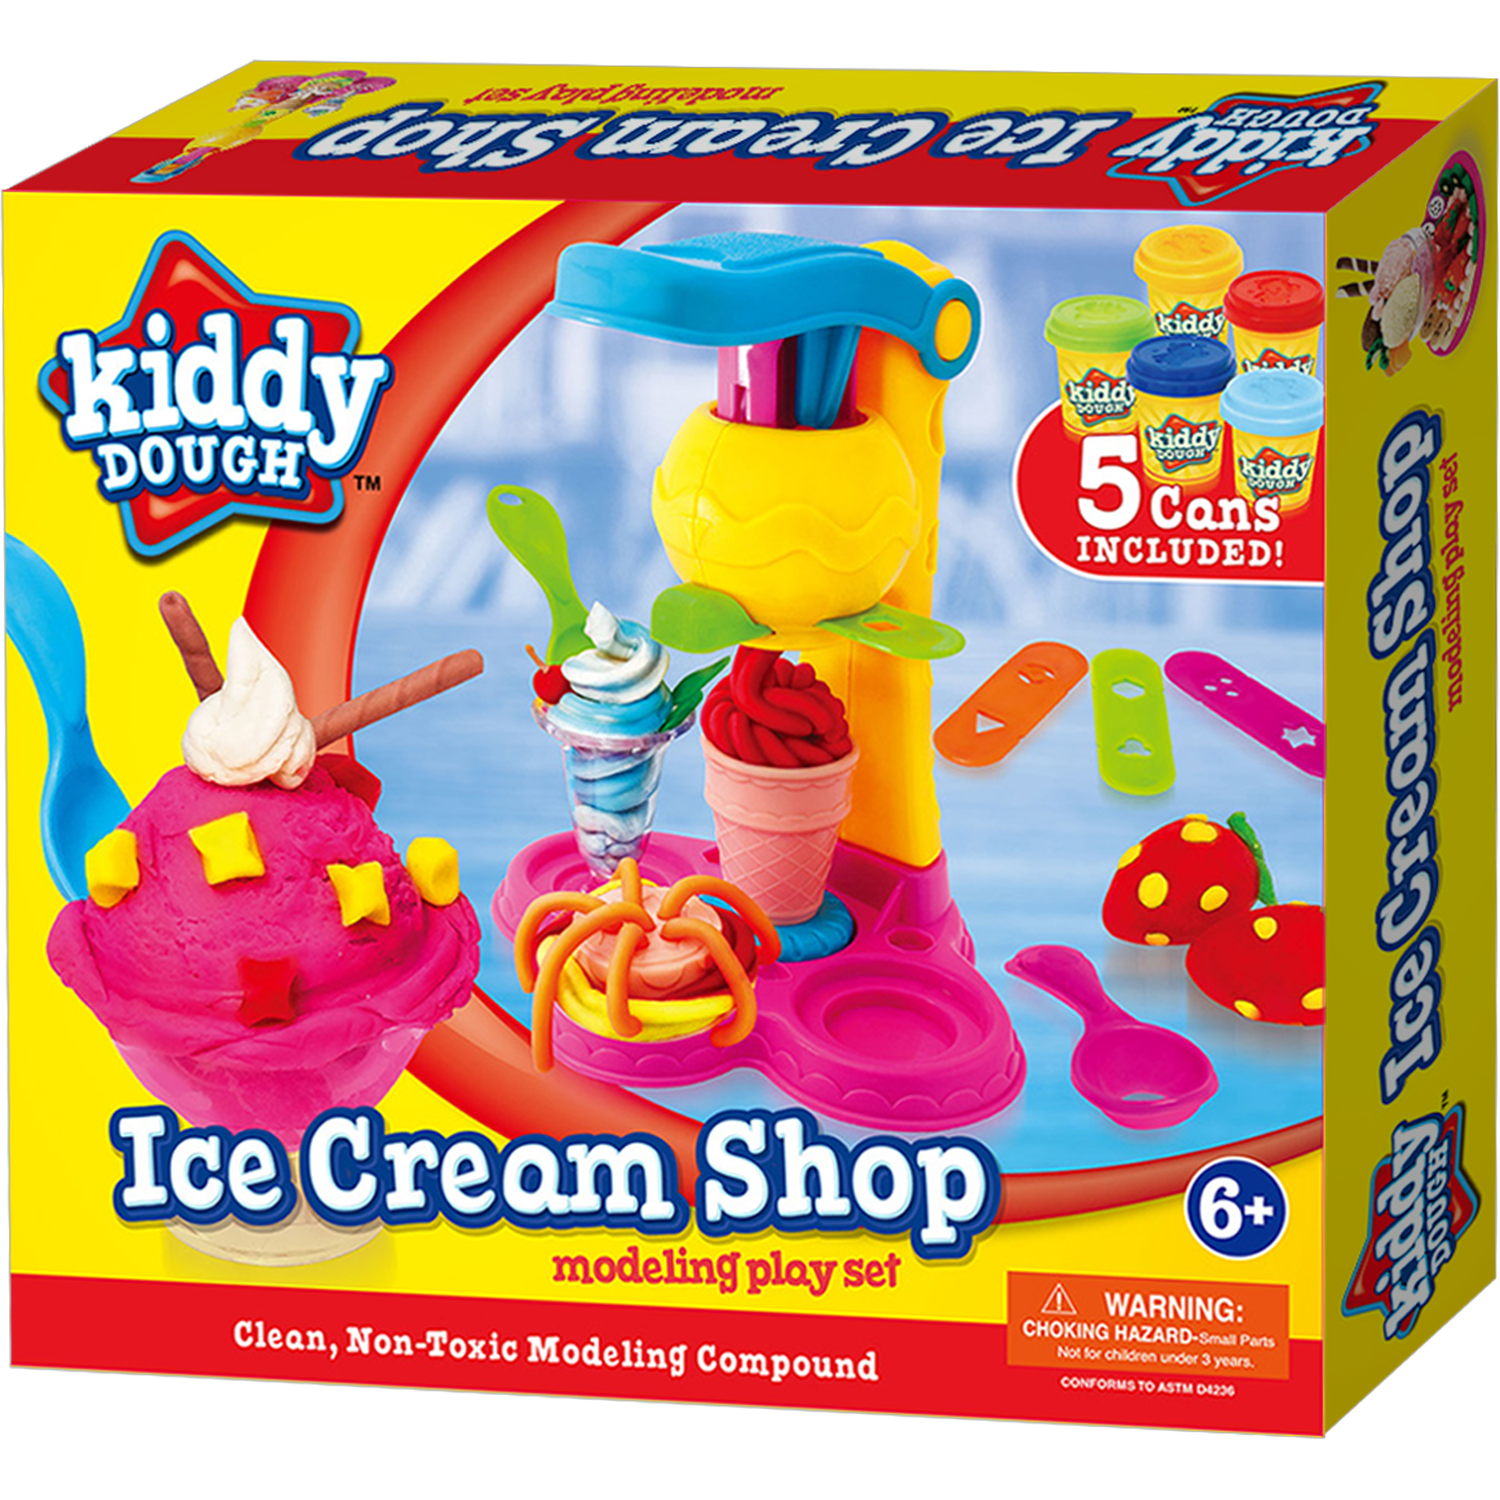 Kiddy Dough Yellow Ice Cream Shop Modeling Play Set Image